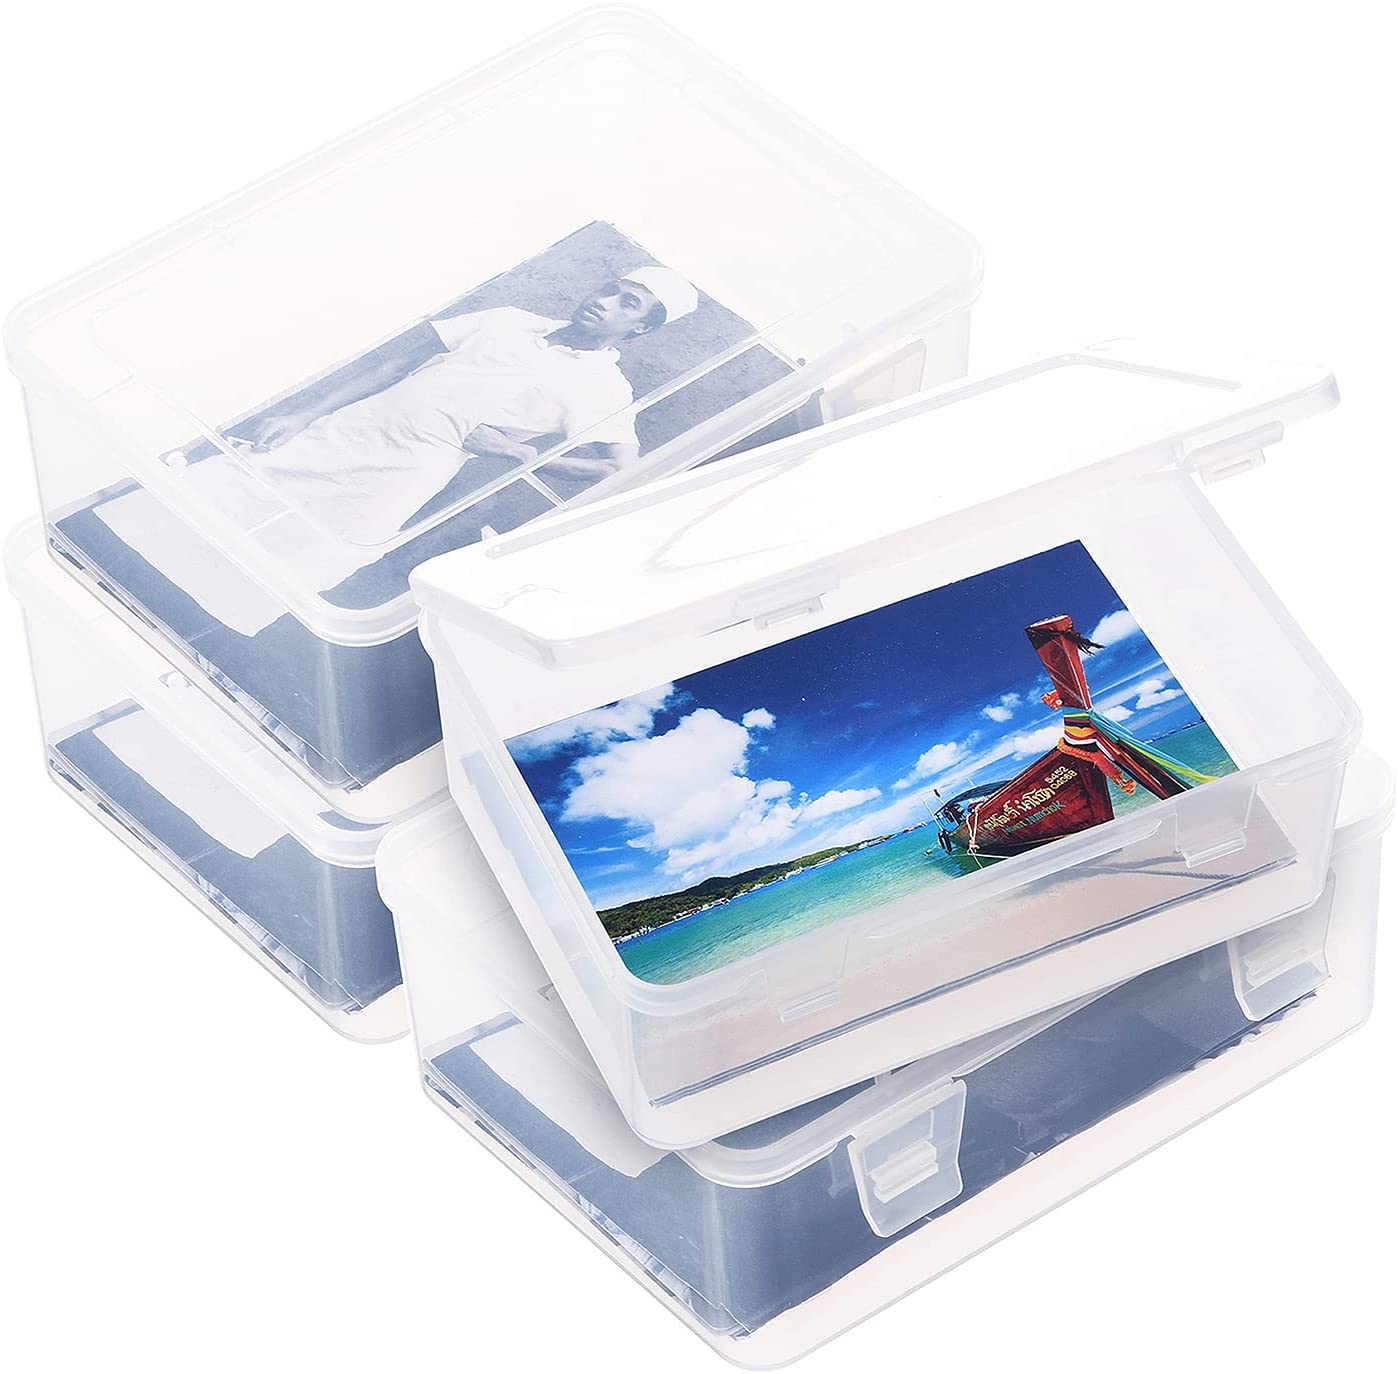 iBune 4 Pack 4"x6" Photo Storage Boxes